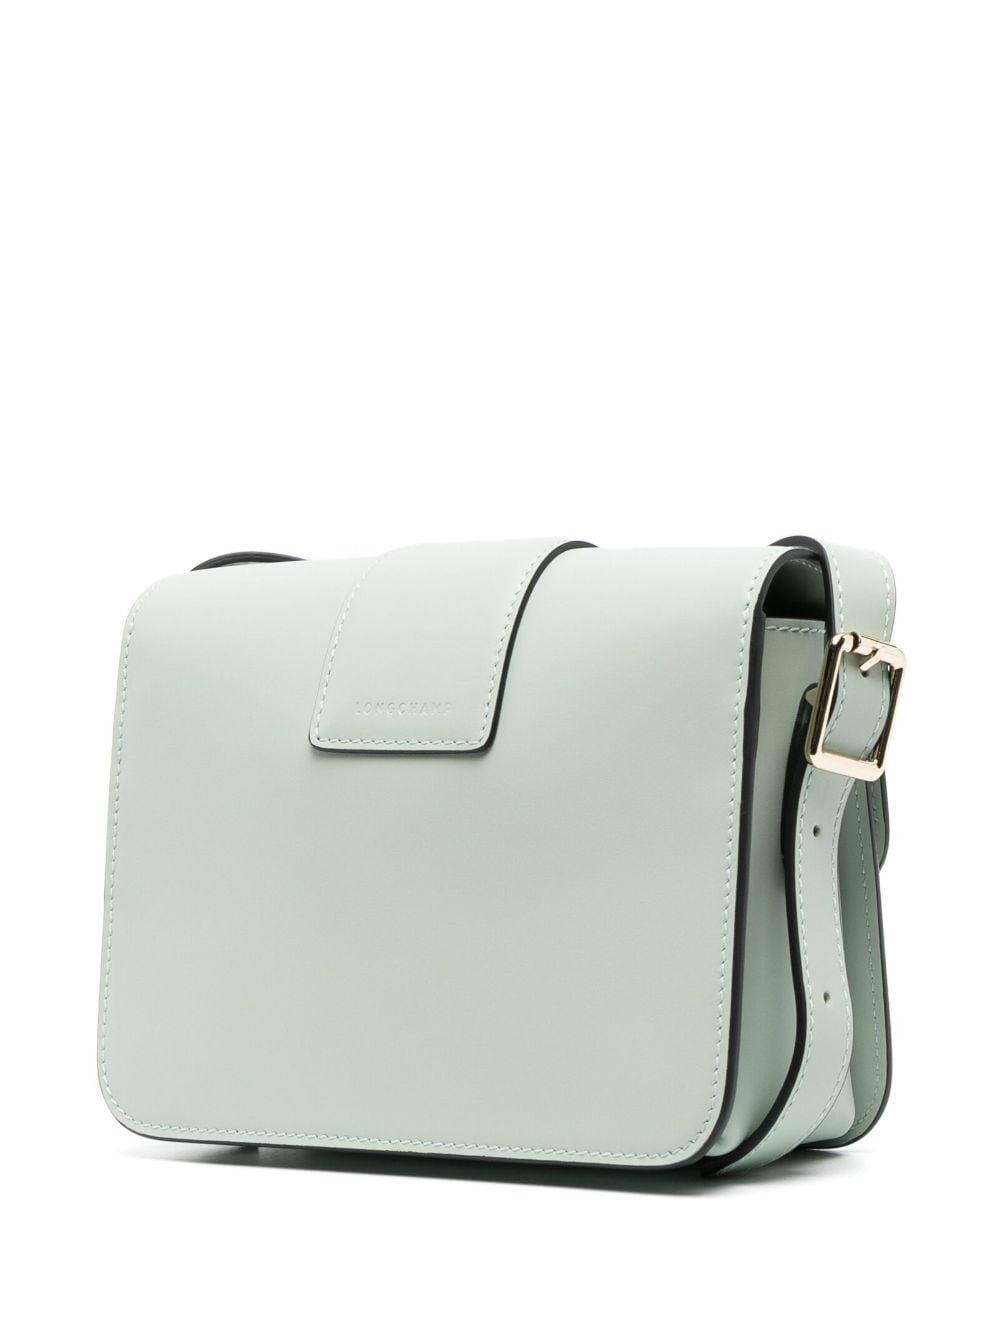 Longchamp Box-trot Small Leather Crossbody Bag in Gray